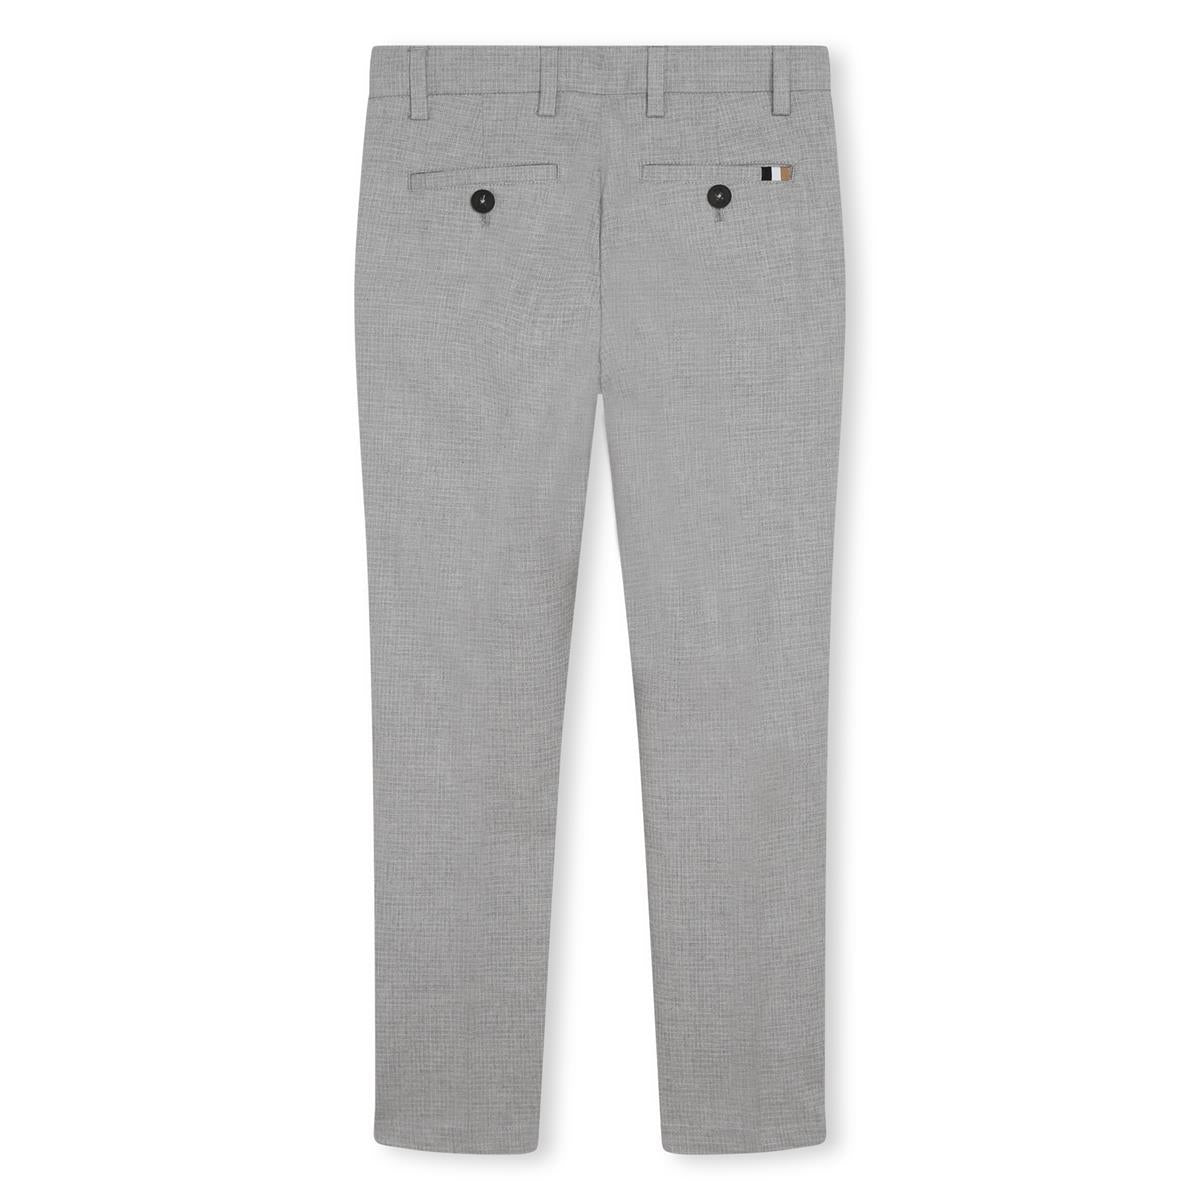 Boys Grey Trousers